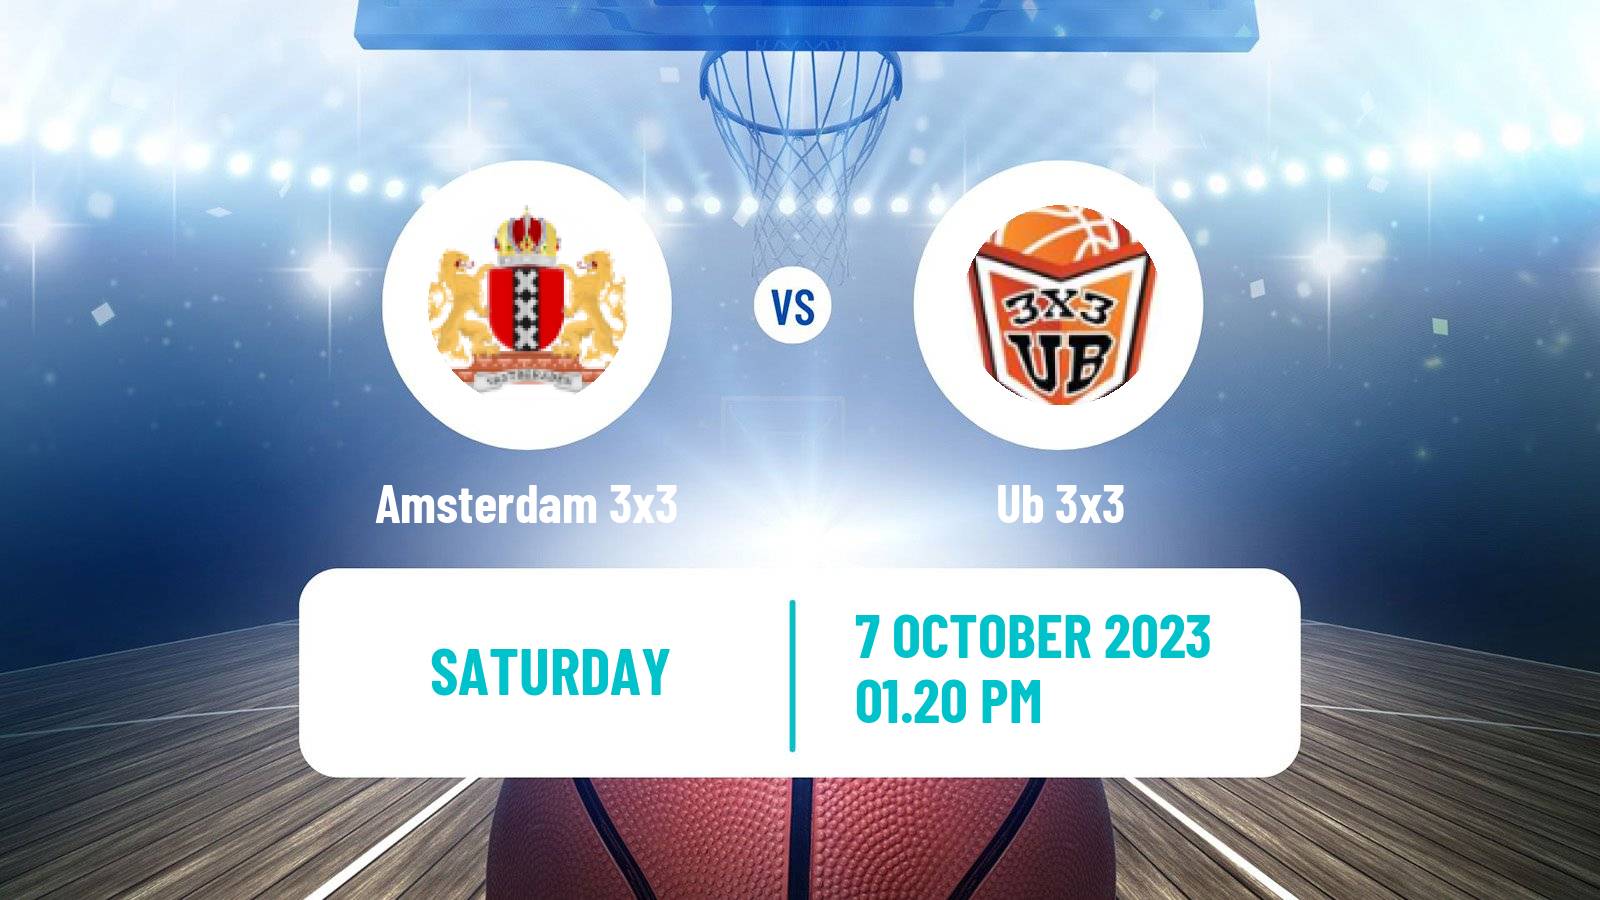 Basketball World Tour Amsterdam Amsterdam 3x3 - Ub 3x3